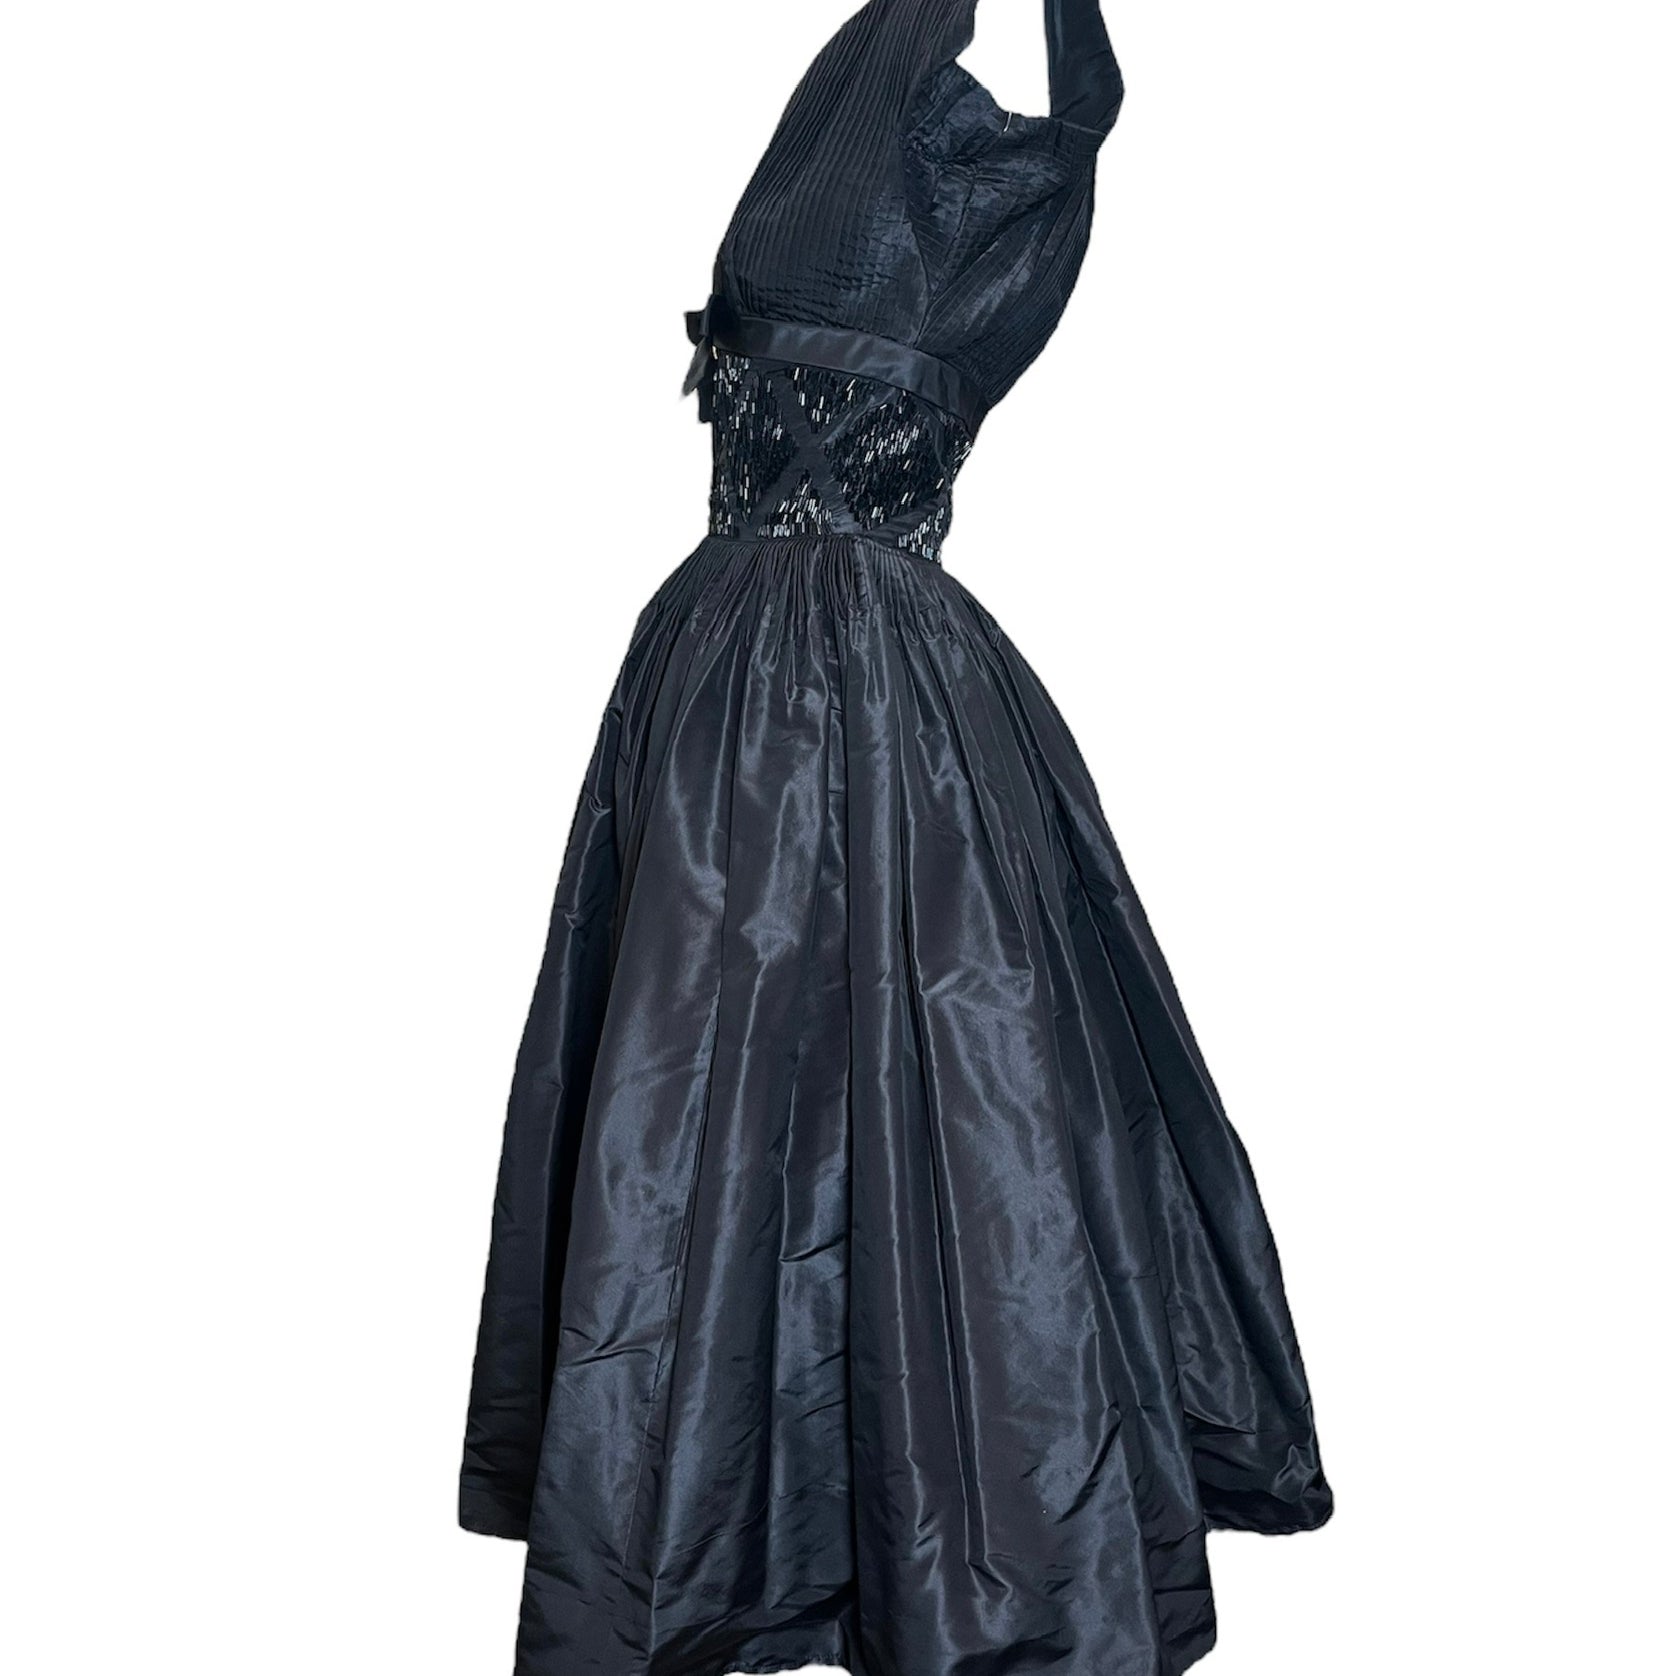 Levy's '50s Black Taffeta Dress with Bodice Beadwork side 2 of 5